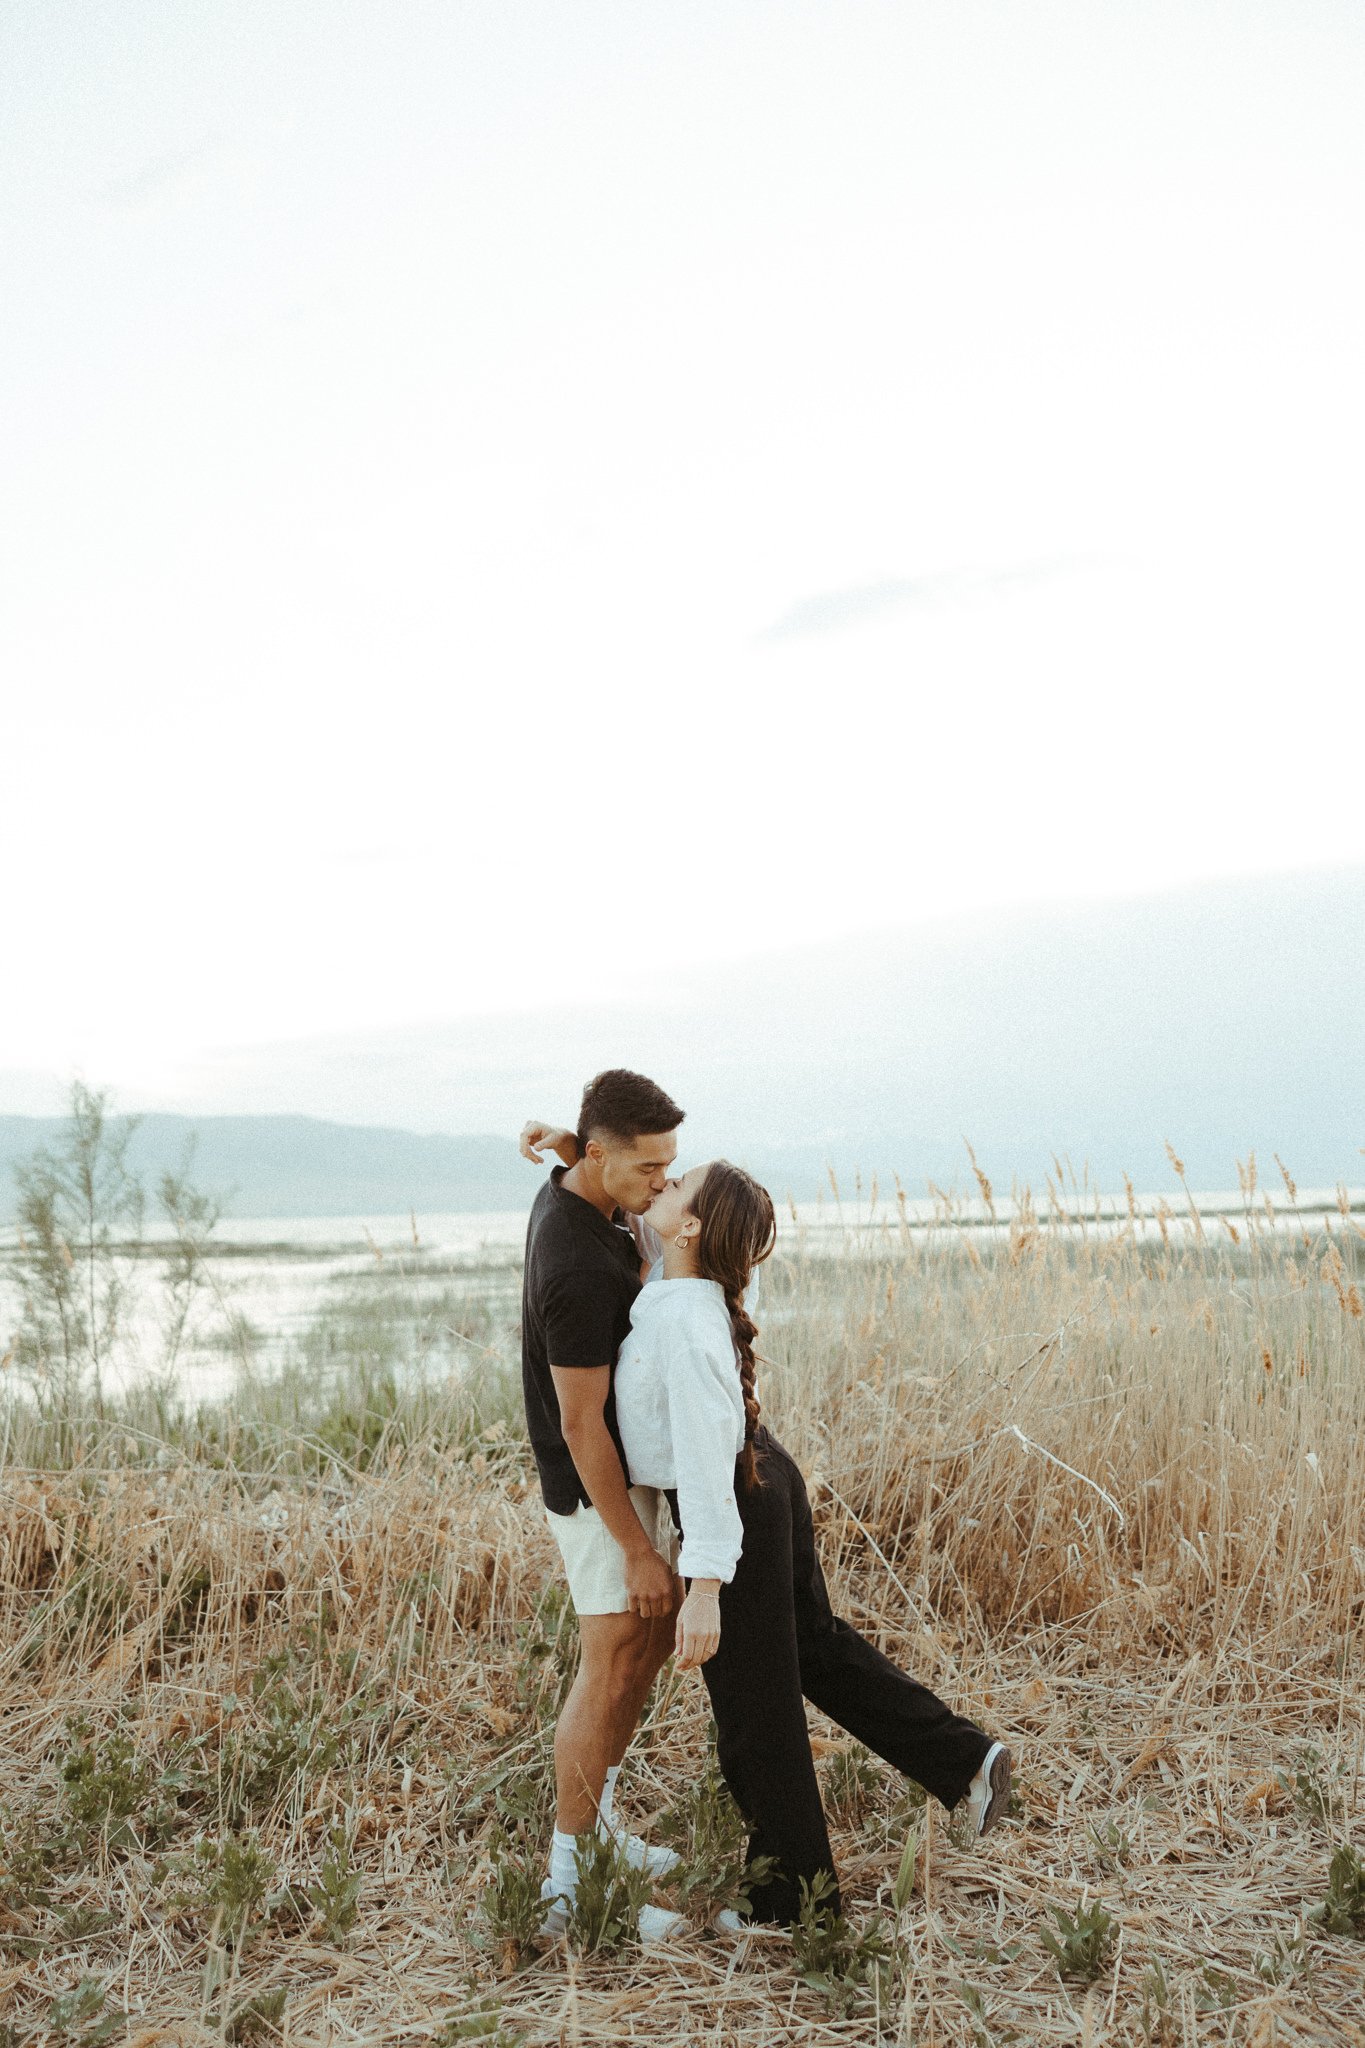 Casual-Couple-Photoshoot-Utah-Lake-Hopes-and-cheers-photo-51.jpg